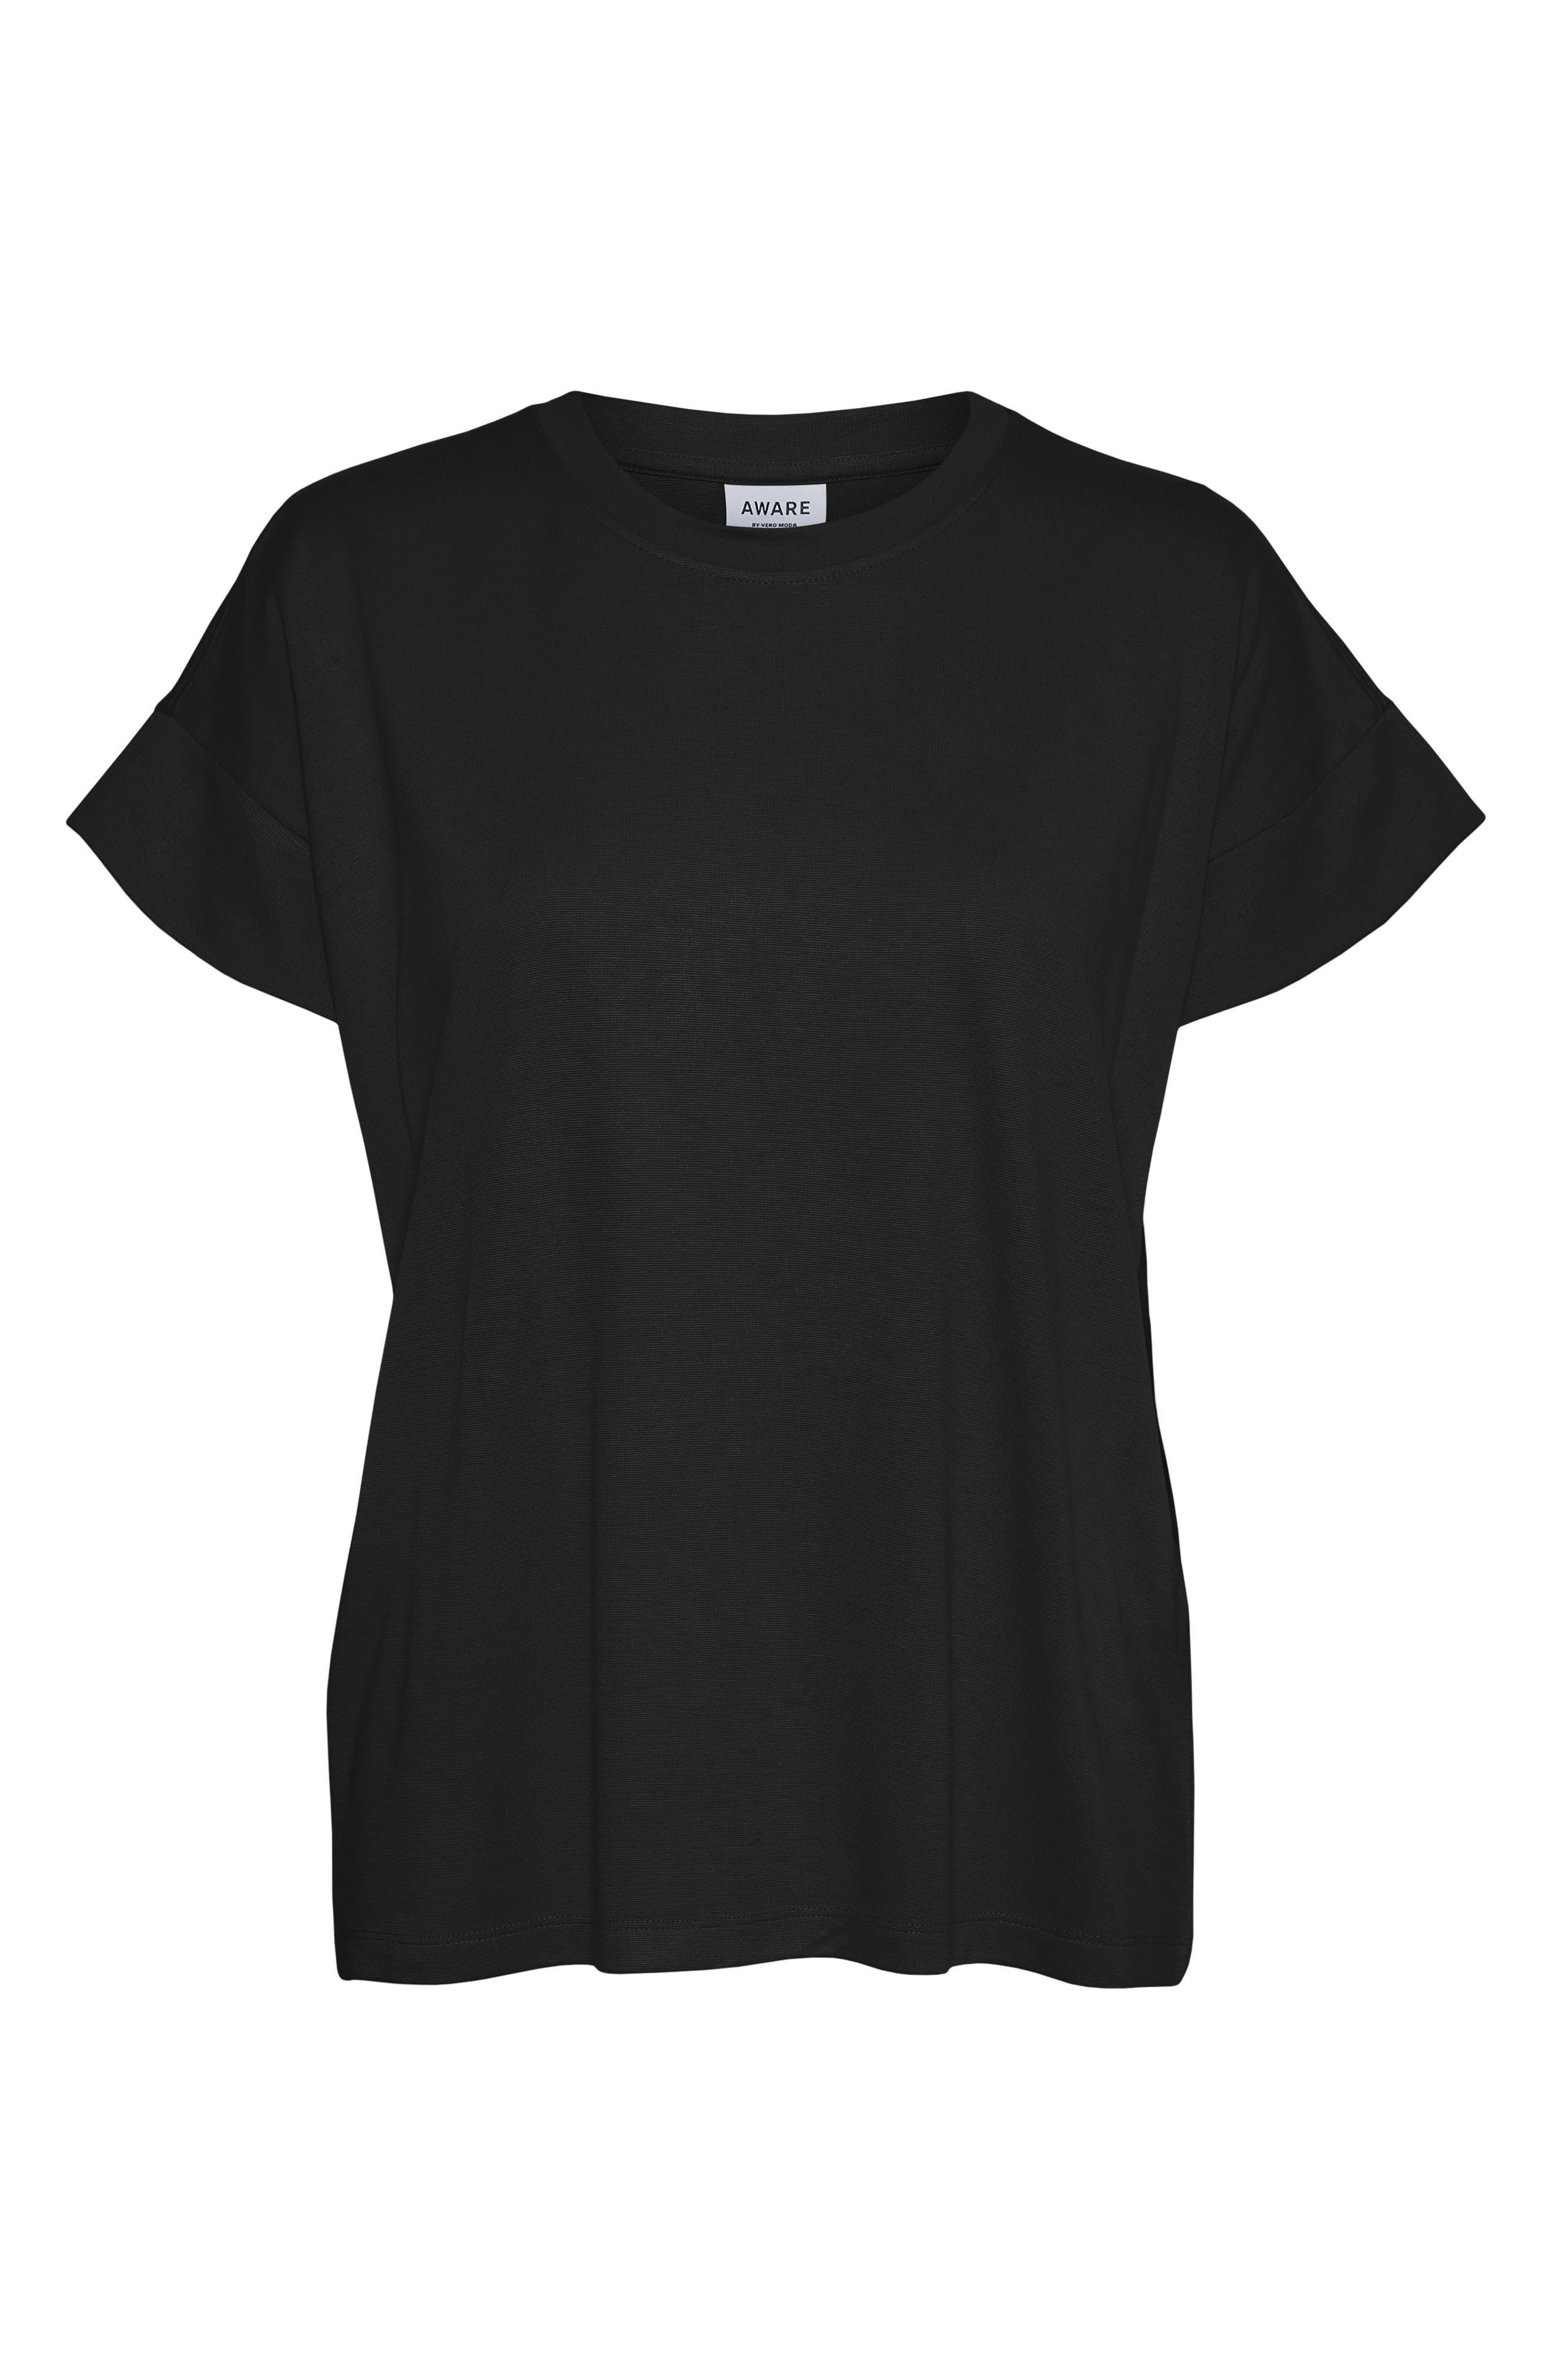 Vero Moda Tara T-shirt in Black | Lyst